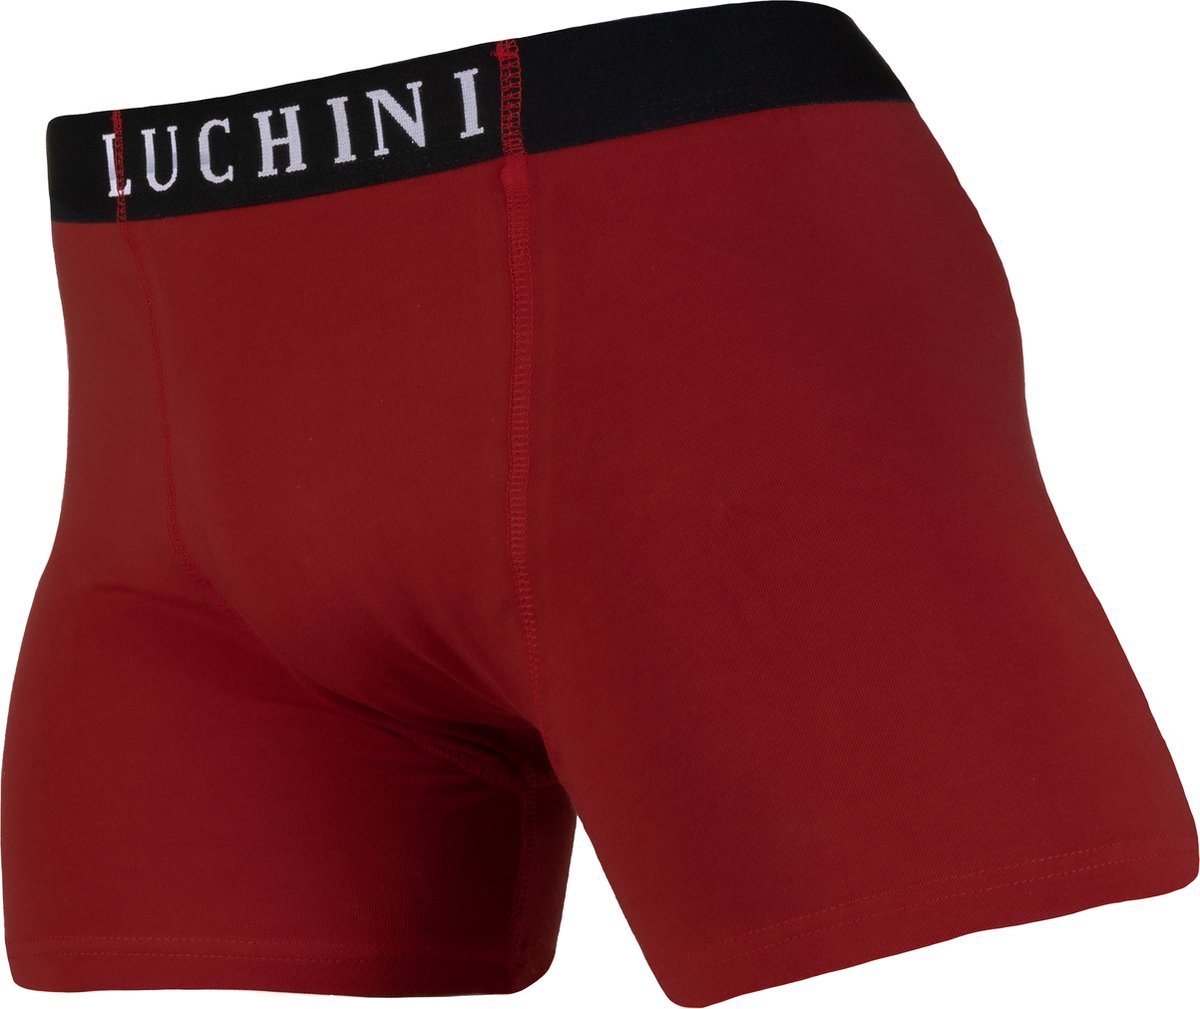 Luchini Clothing ® - LC Classic Maat M - Premium Boxershorts heren - Heren Privacy Boxers met verborgen vak - 2-PACK boxershorts - Stealth boxers - Rood